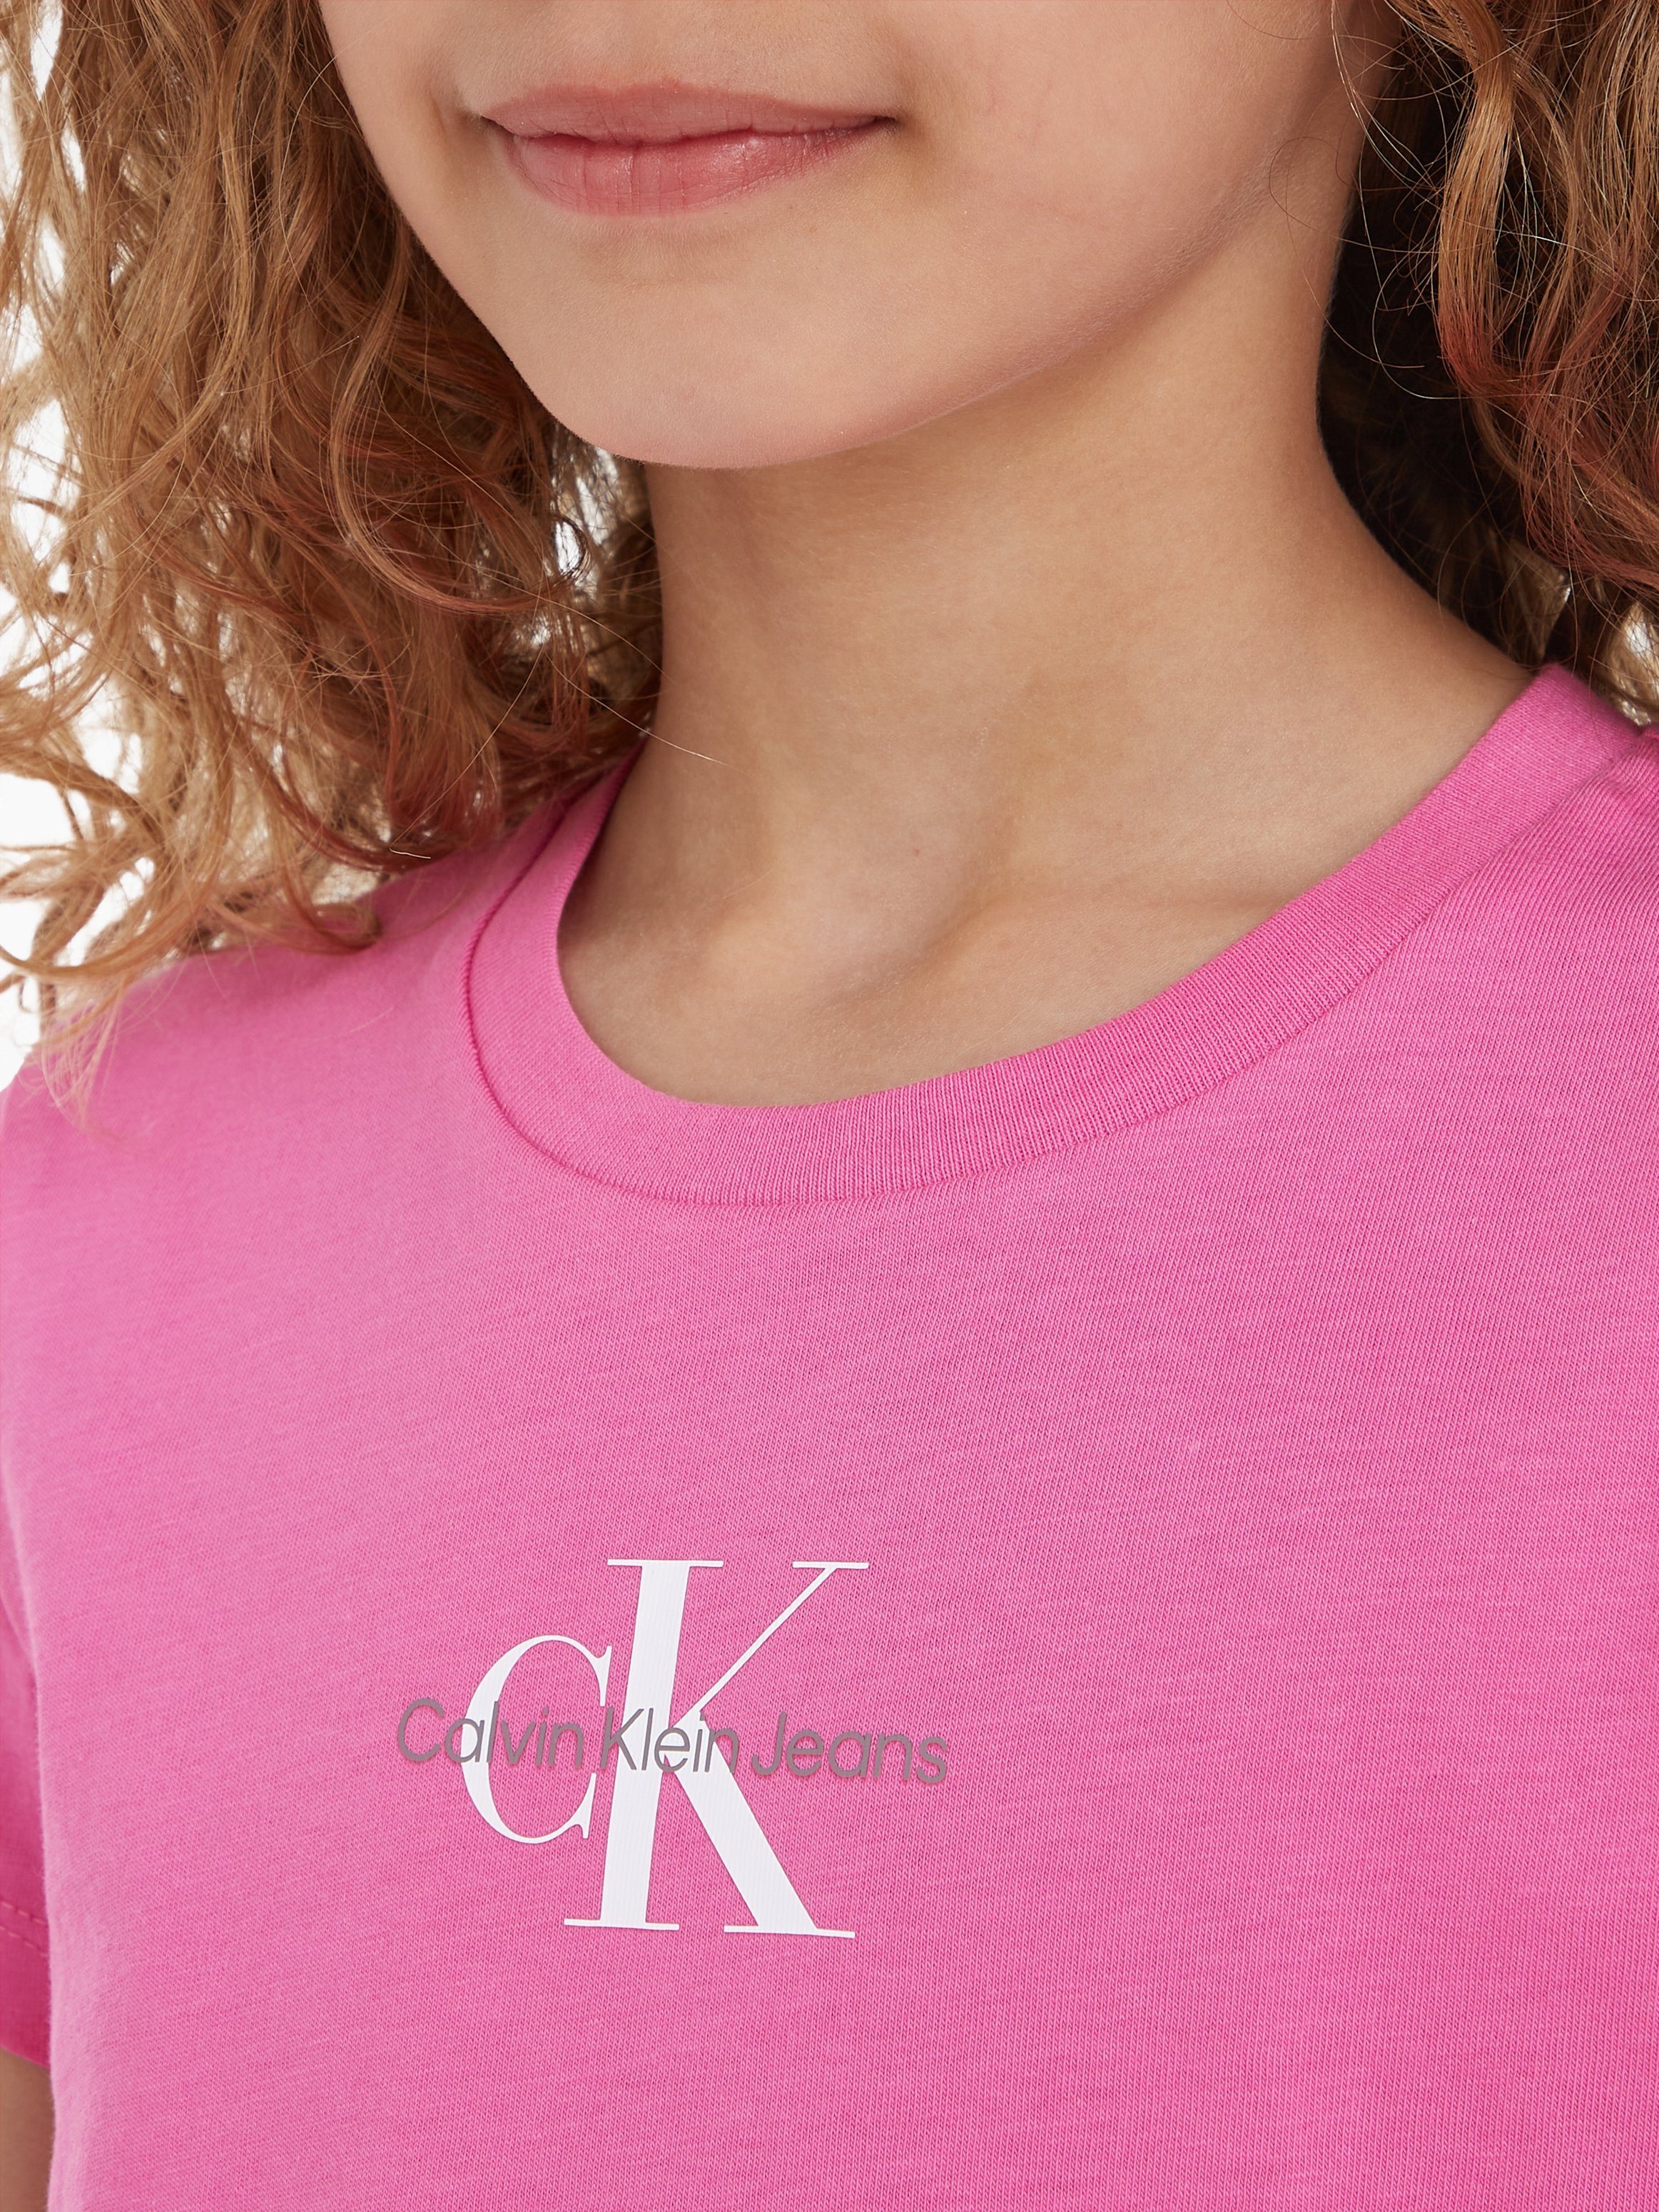 Calvin Klein MICRO Jeans Amour T-Shirt MONOGRAM Pink TOP